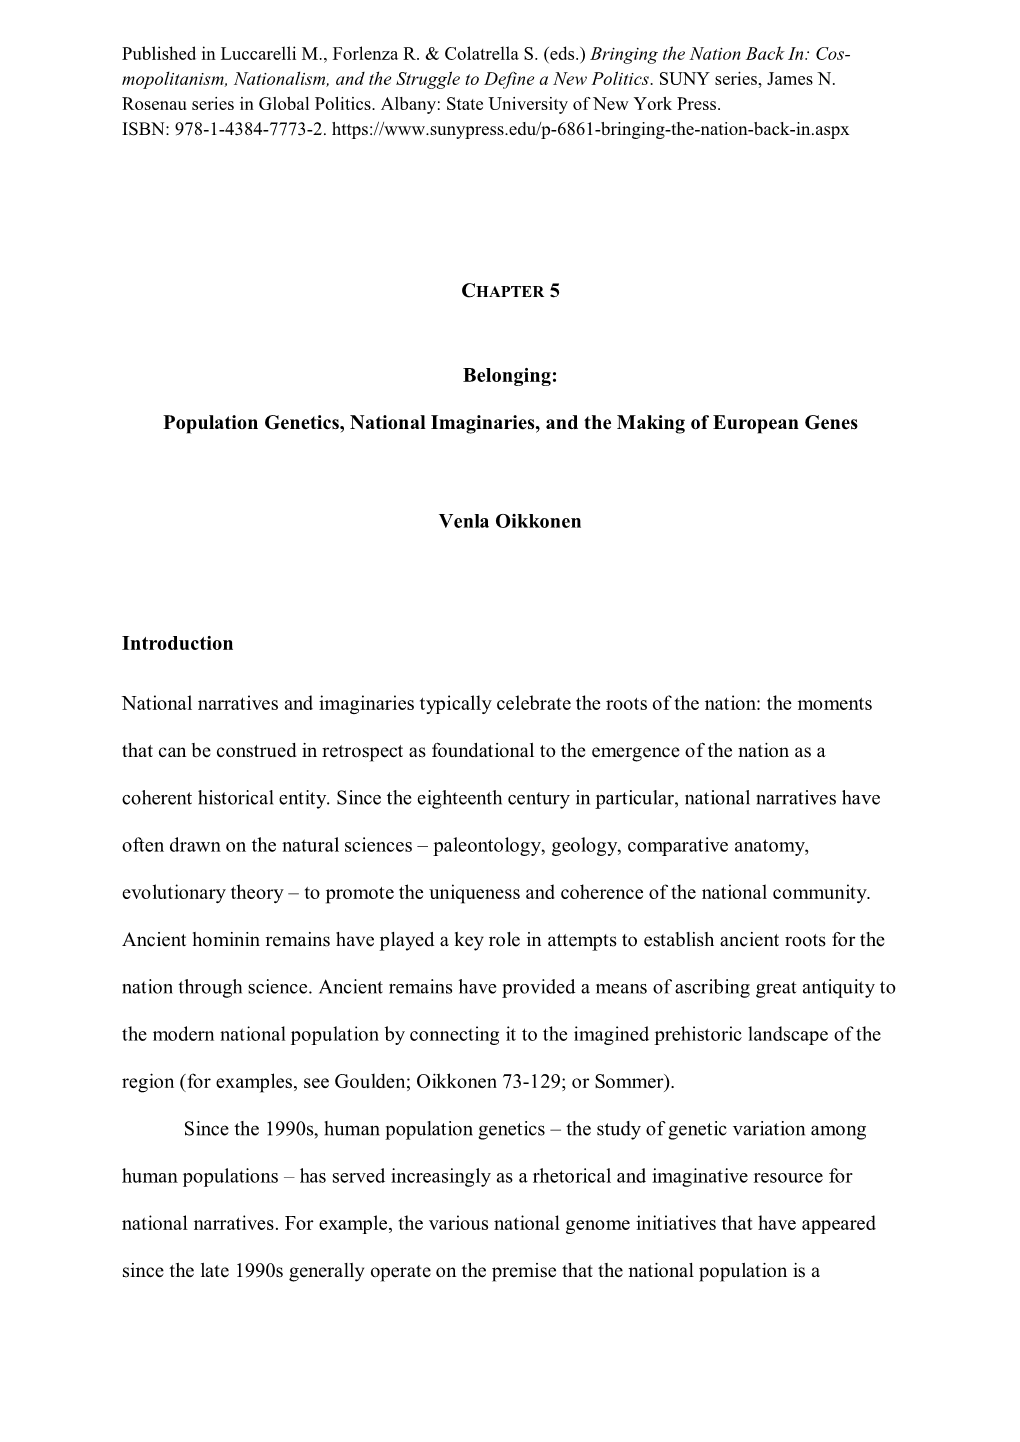 Belonging: Population Genetics, National Imaginaries, and The